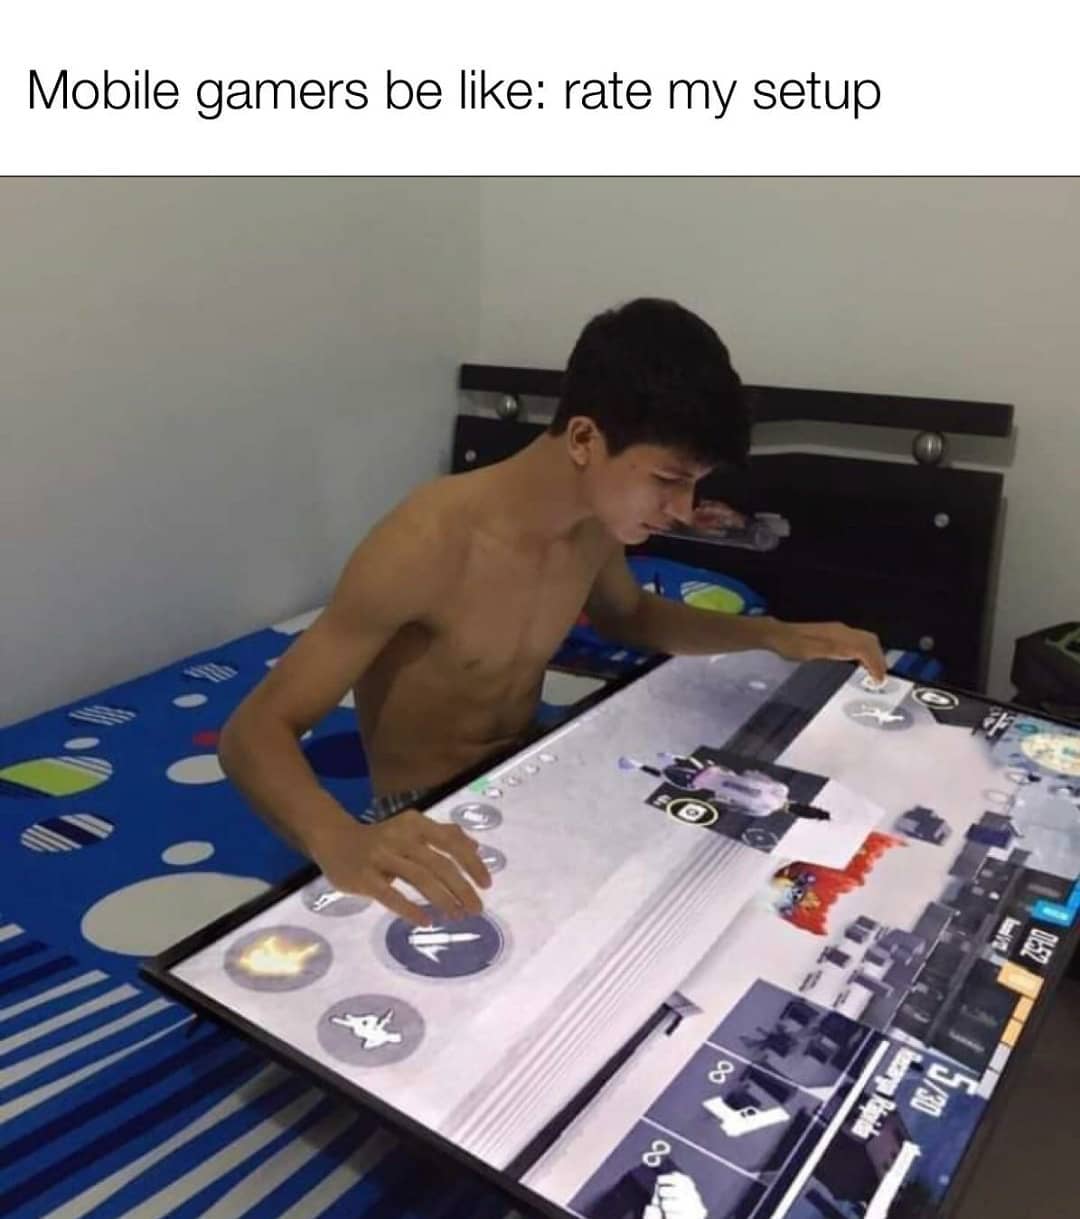 dank memes - electronics - Mobile gamers be rate my setup 8 530 8